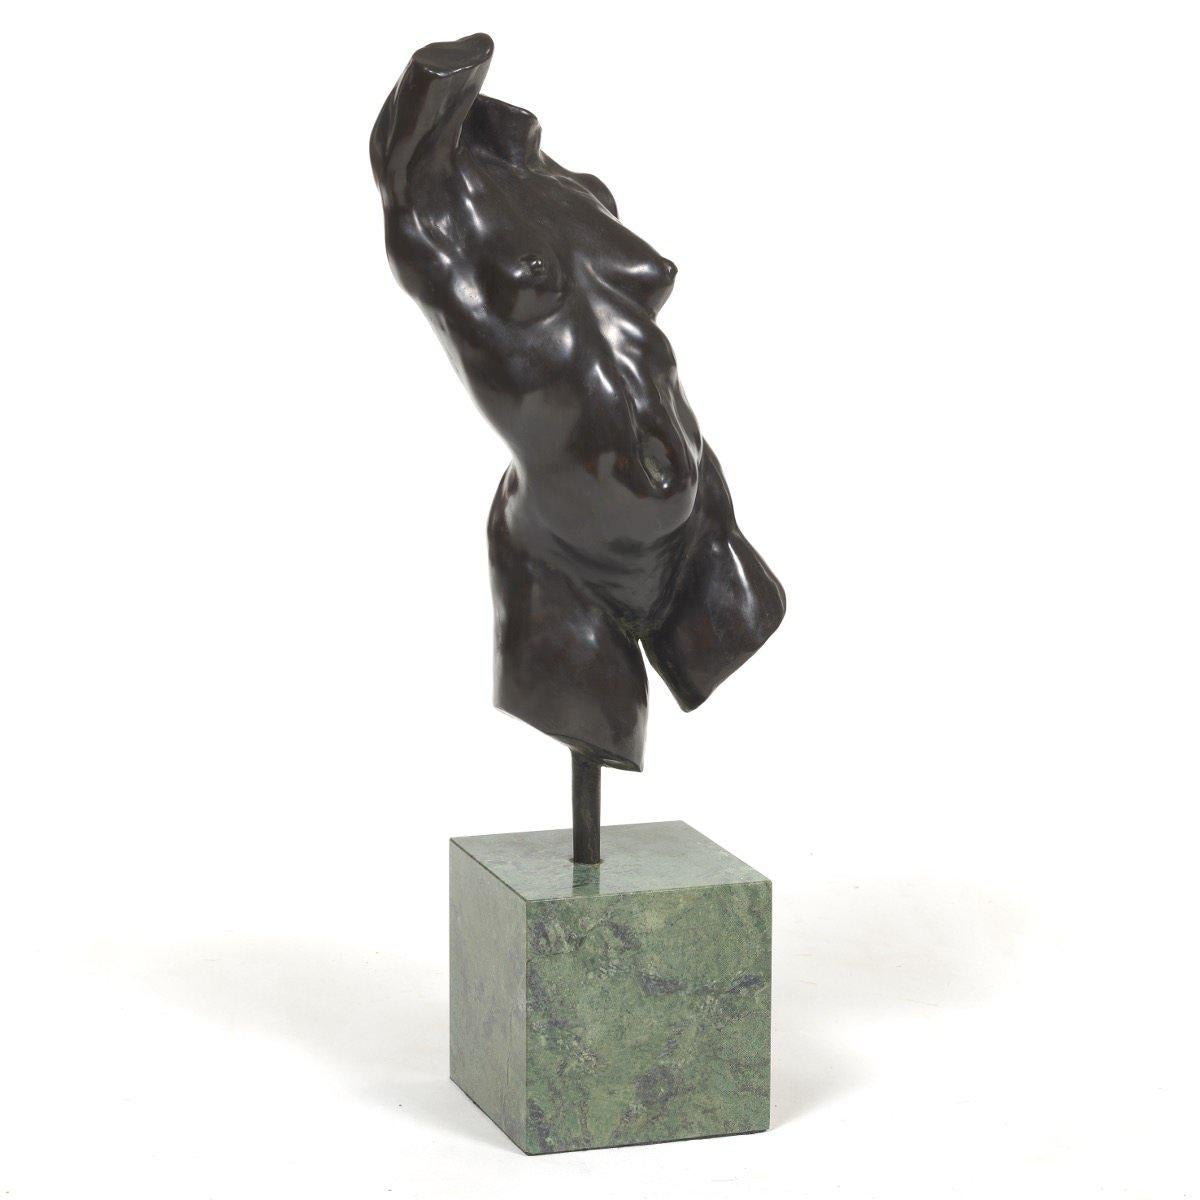 Nu féminin torse Sculpture en bronze, 20e siècle Artiste américain contemporain - Or Figurative Sculpture par Alan Cottrill